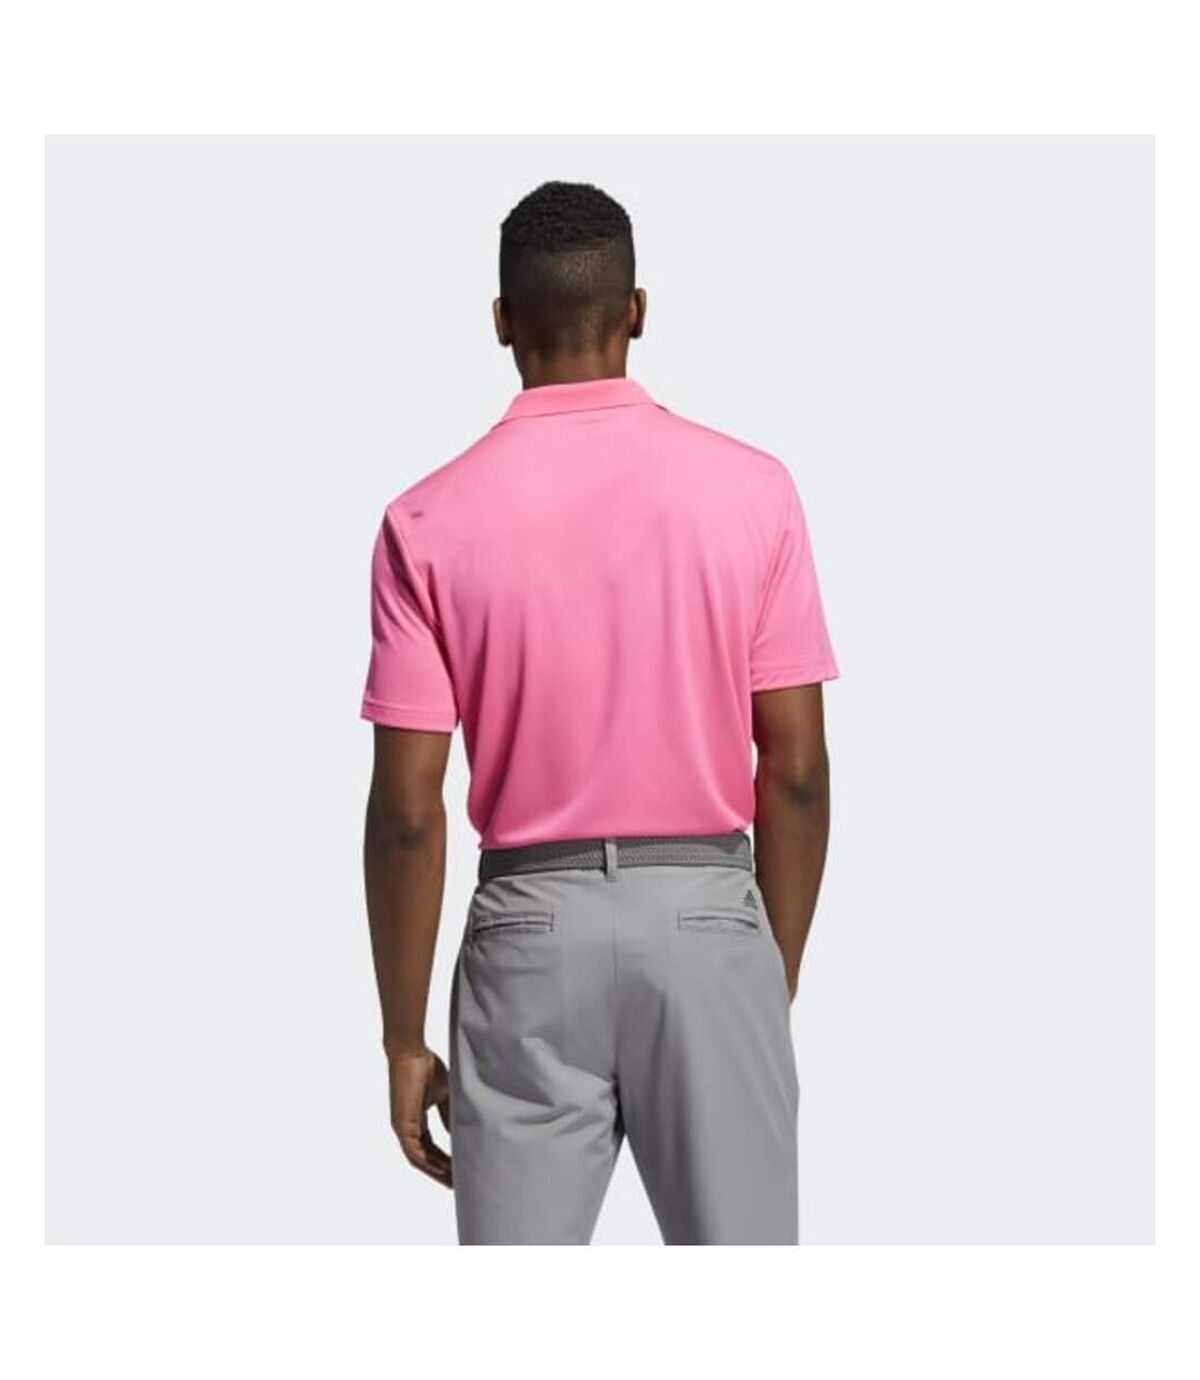 Adidas - Polo - Homme (Rose) - UTRW7892